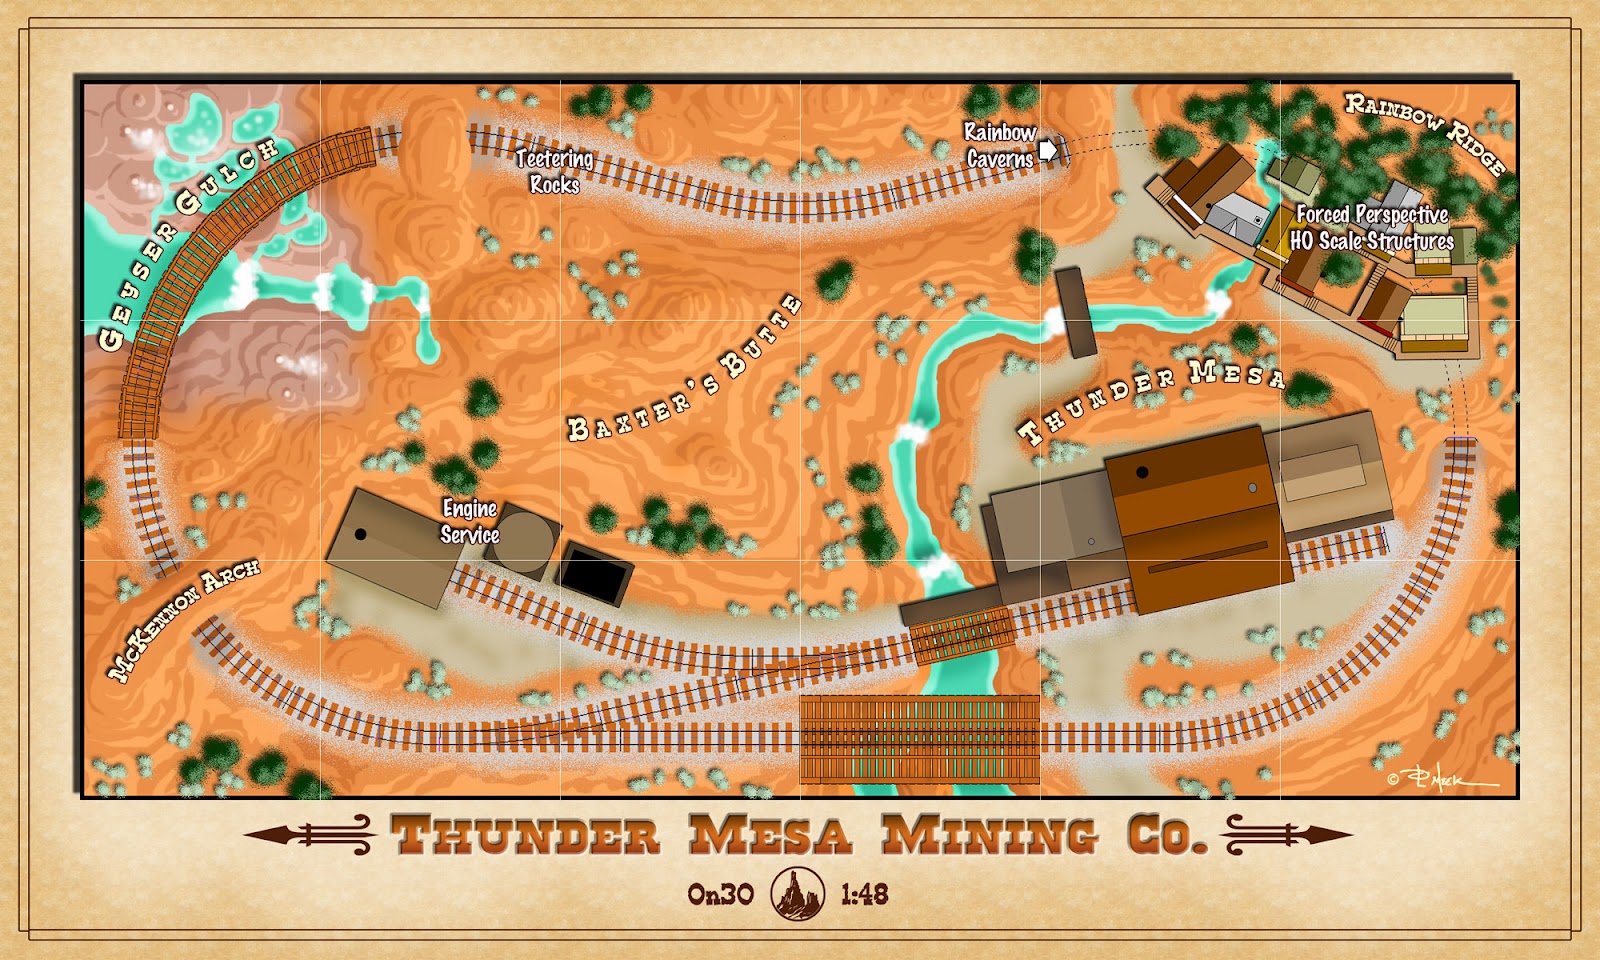 Thunder Mesa Mining Co.: A Plan for Thunder Mesa